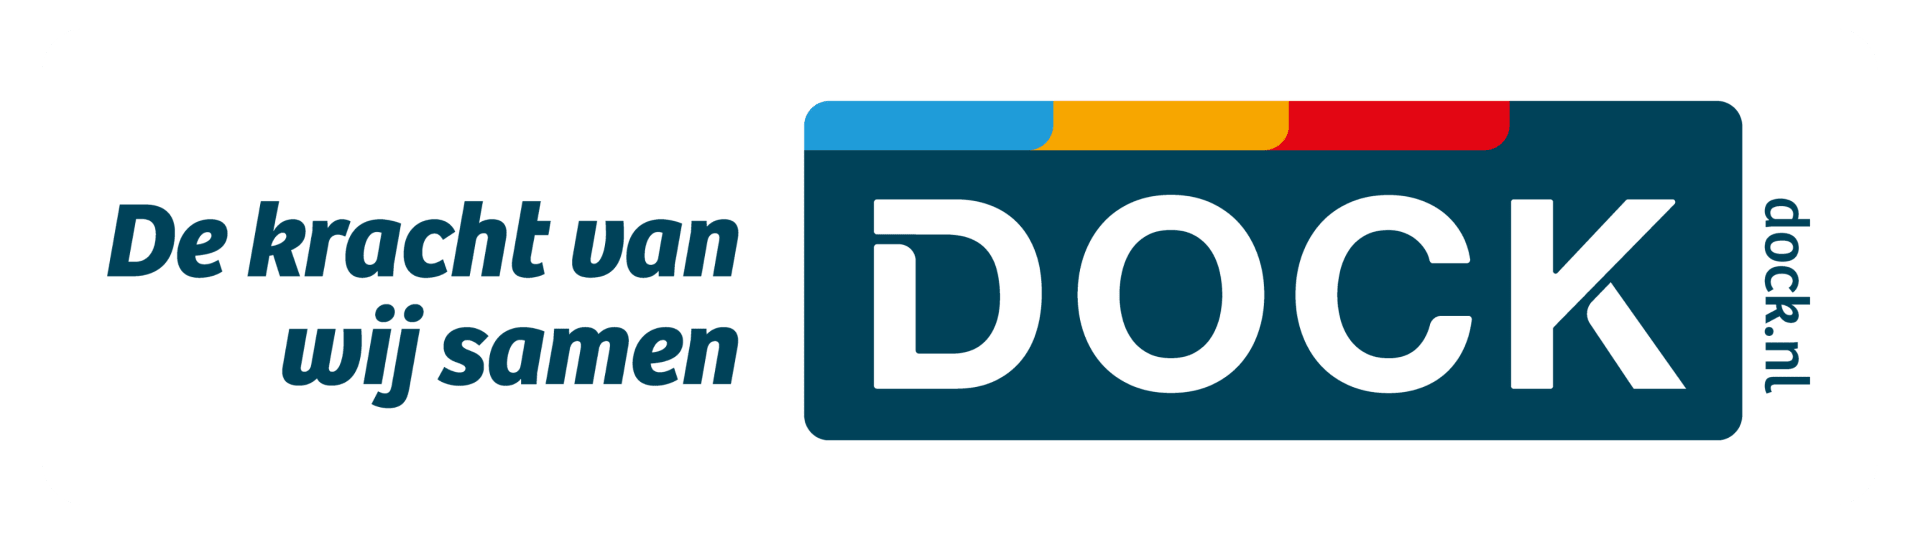 DOCK logo